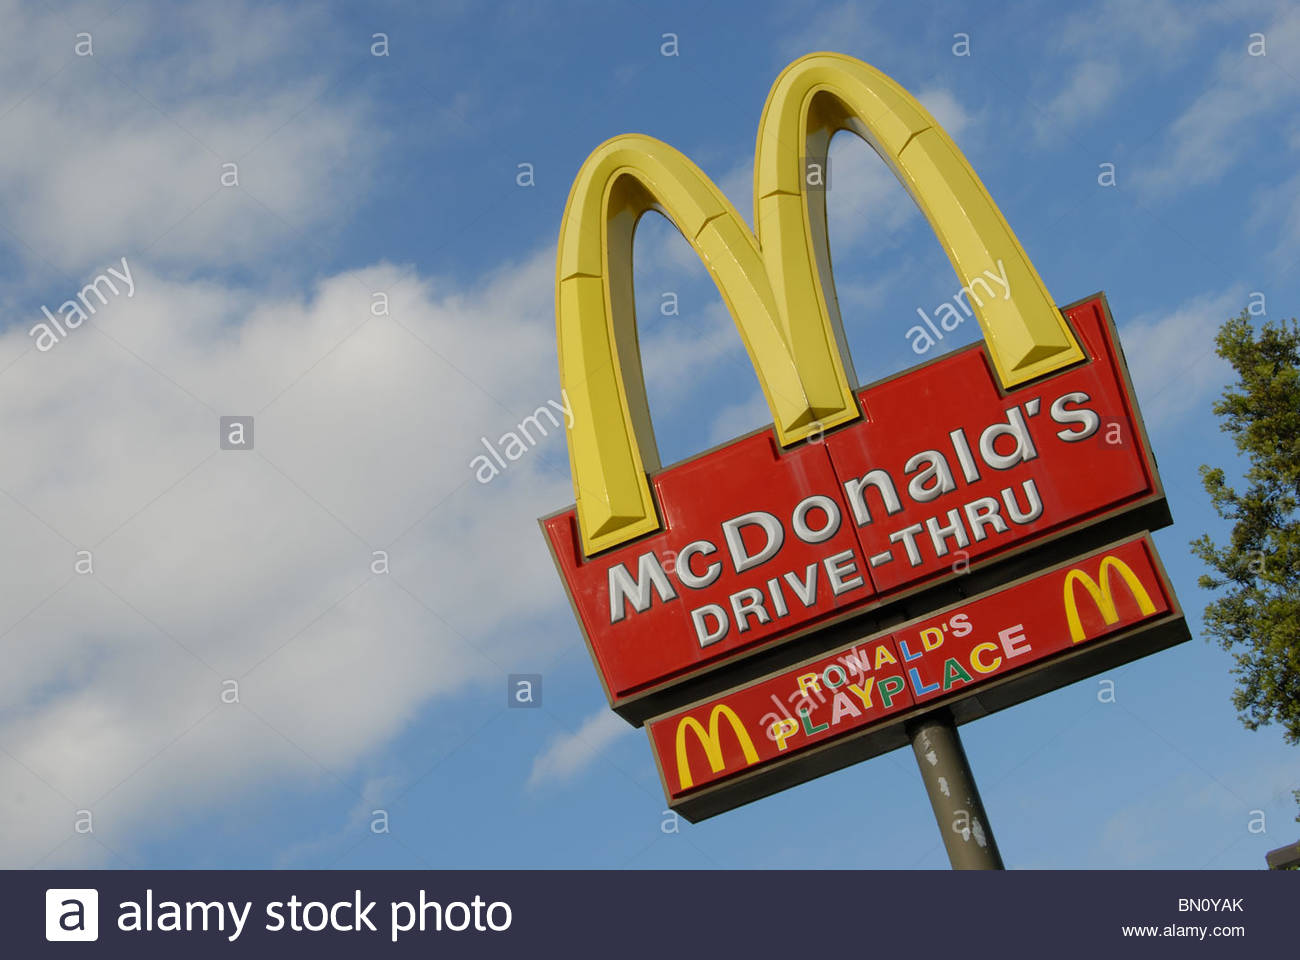 Macdonalds Restaurant Stock Photos & Macdonalds Restaurant Stock Images ...